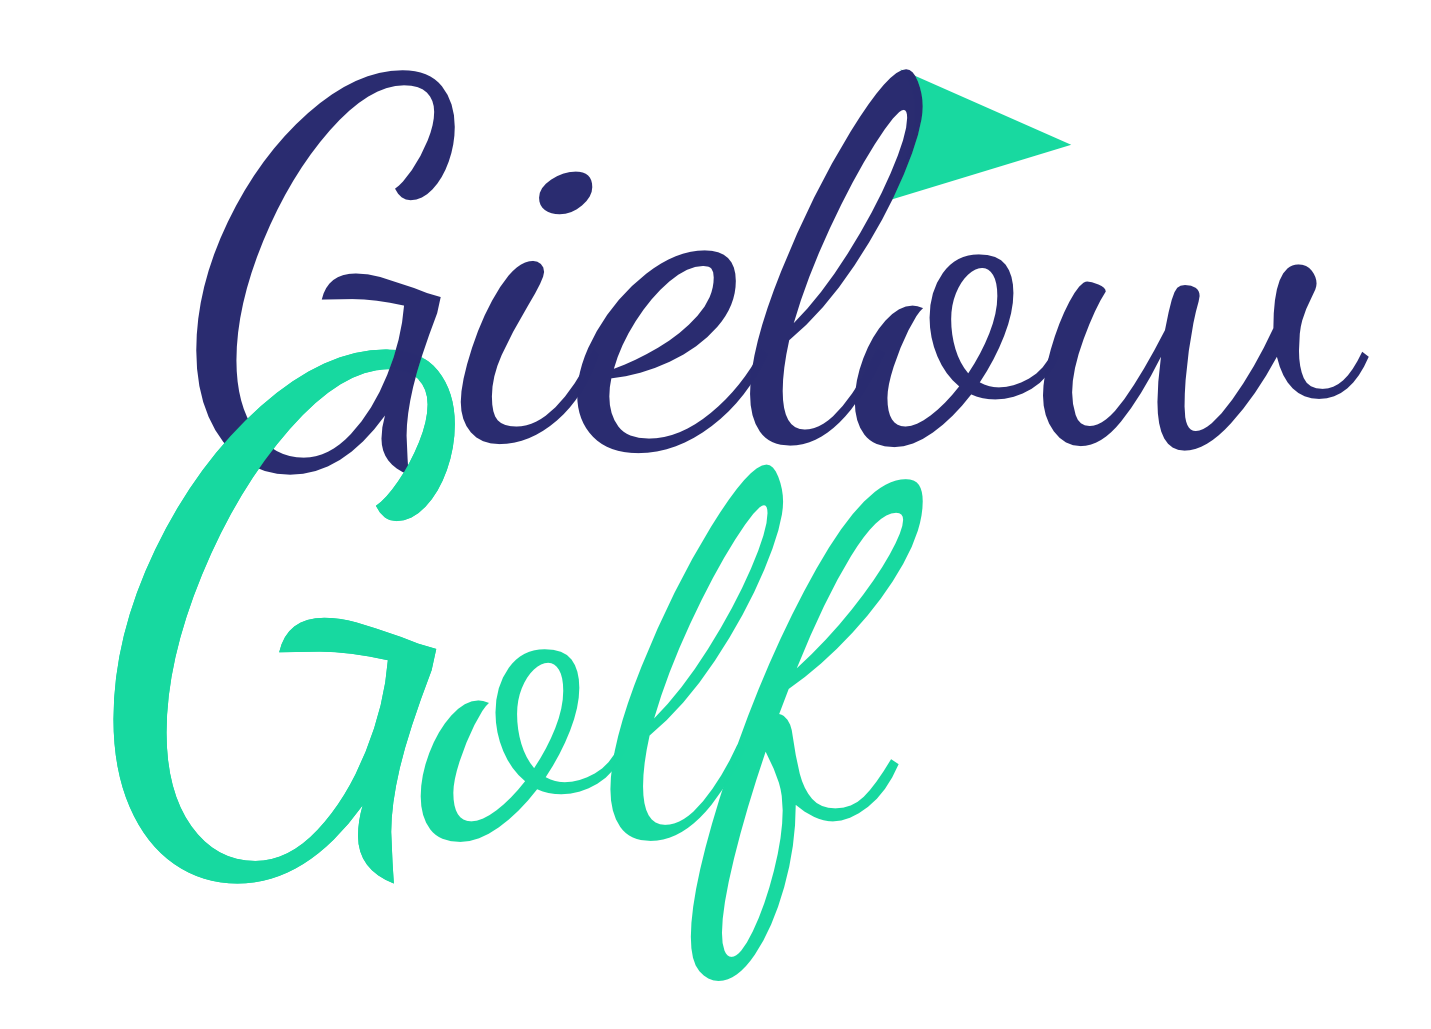 Gielow Golf